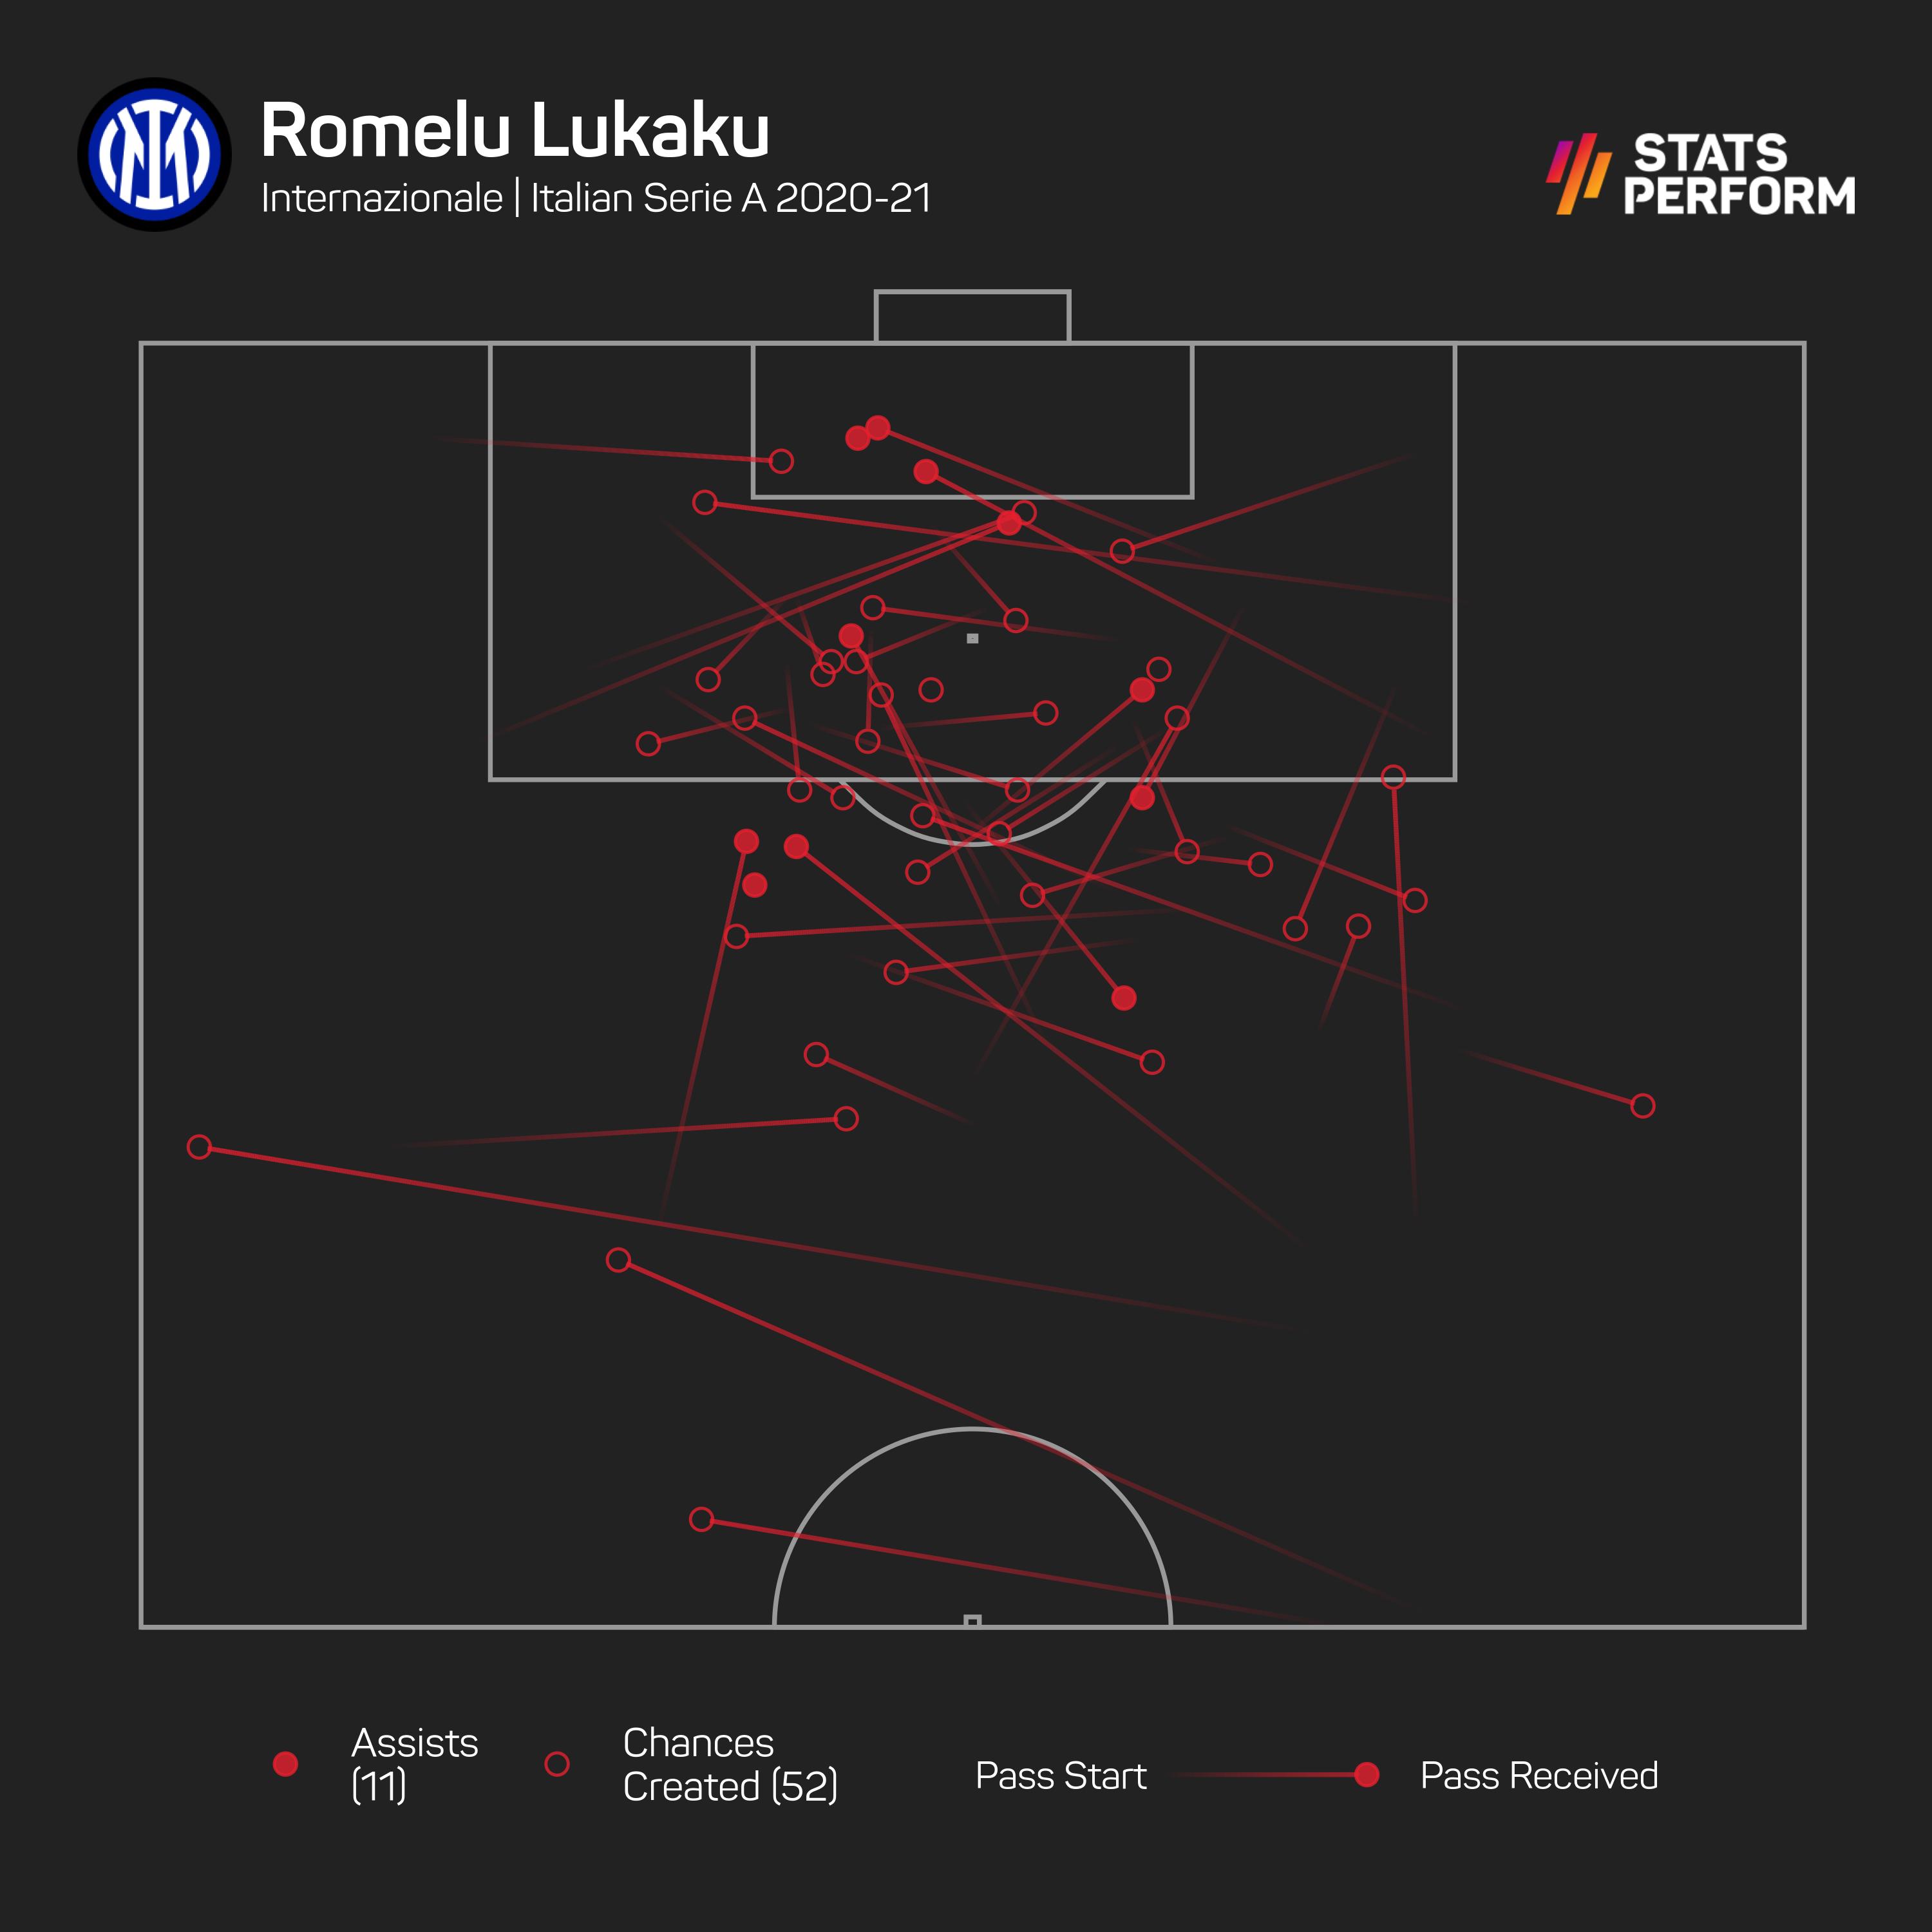 Romelu Lukaku's chances created in 2020-21